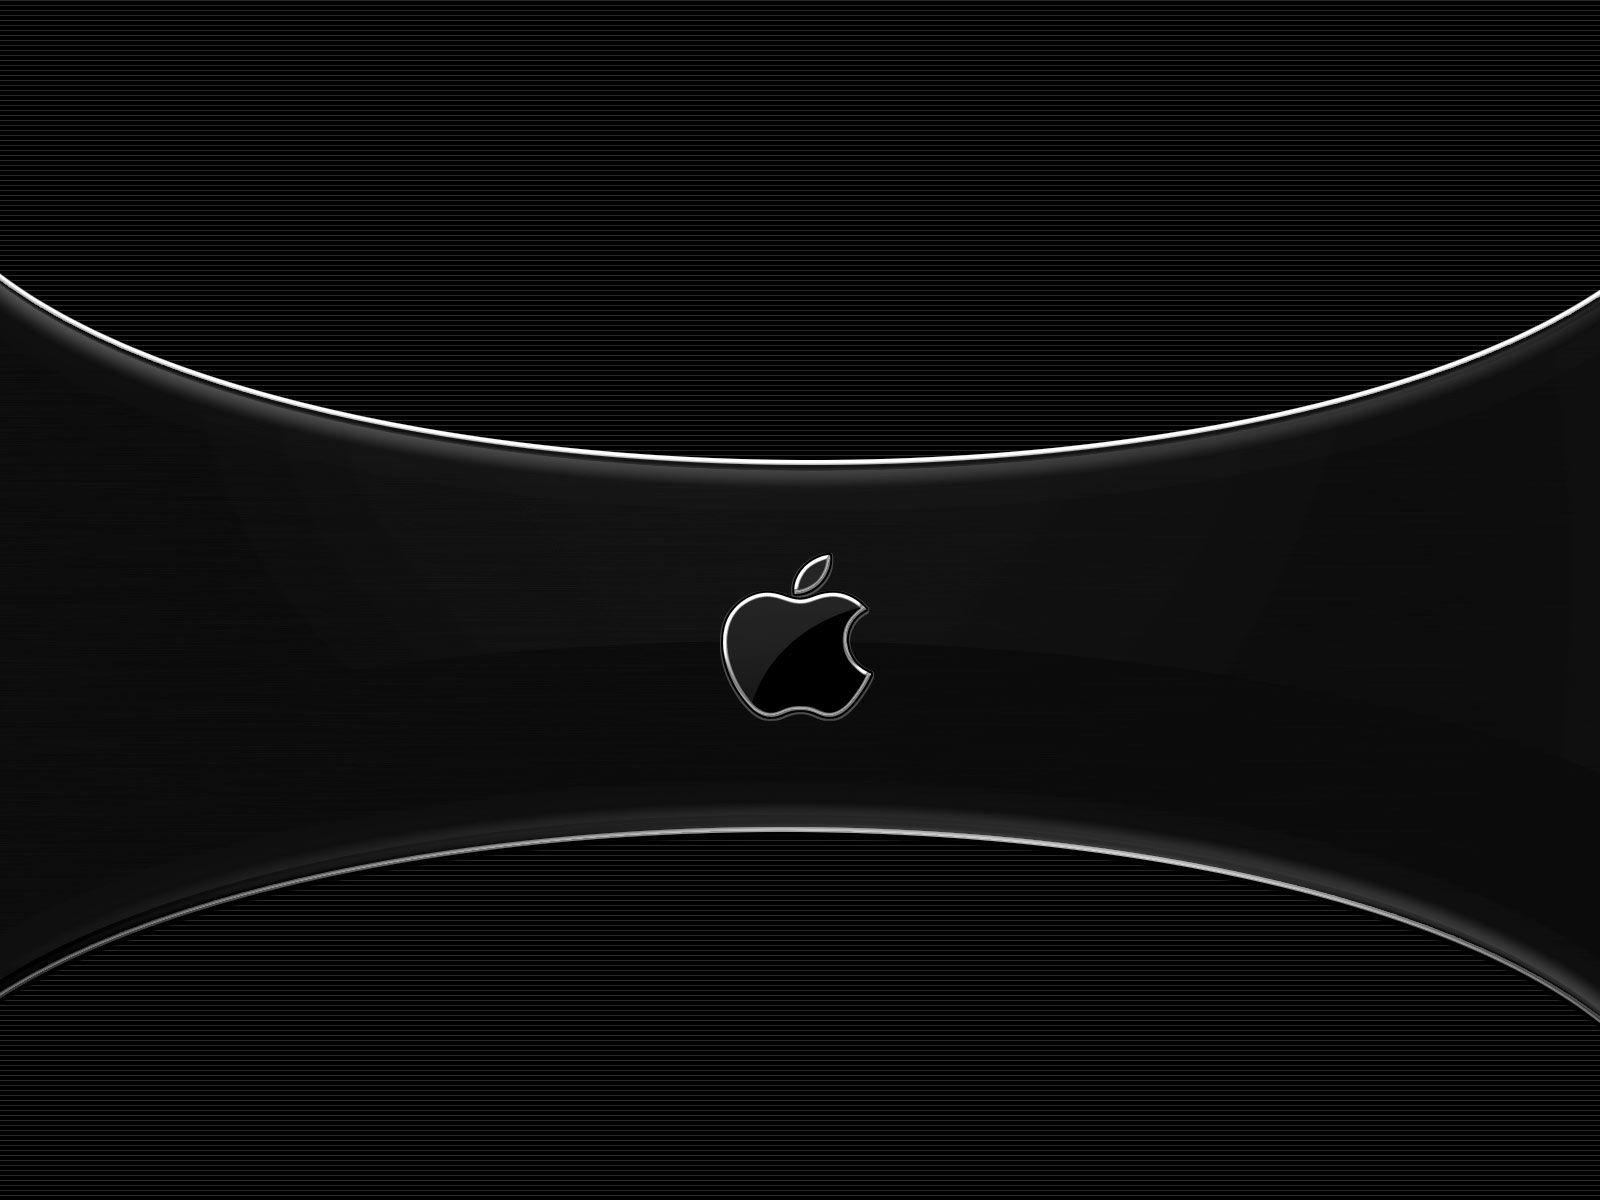 Apple plain black background desktop HD Wallpaper. High Quality